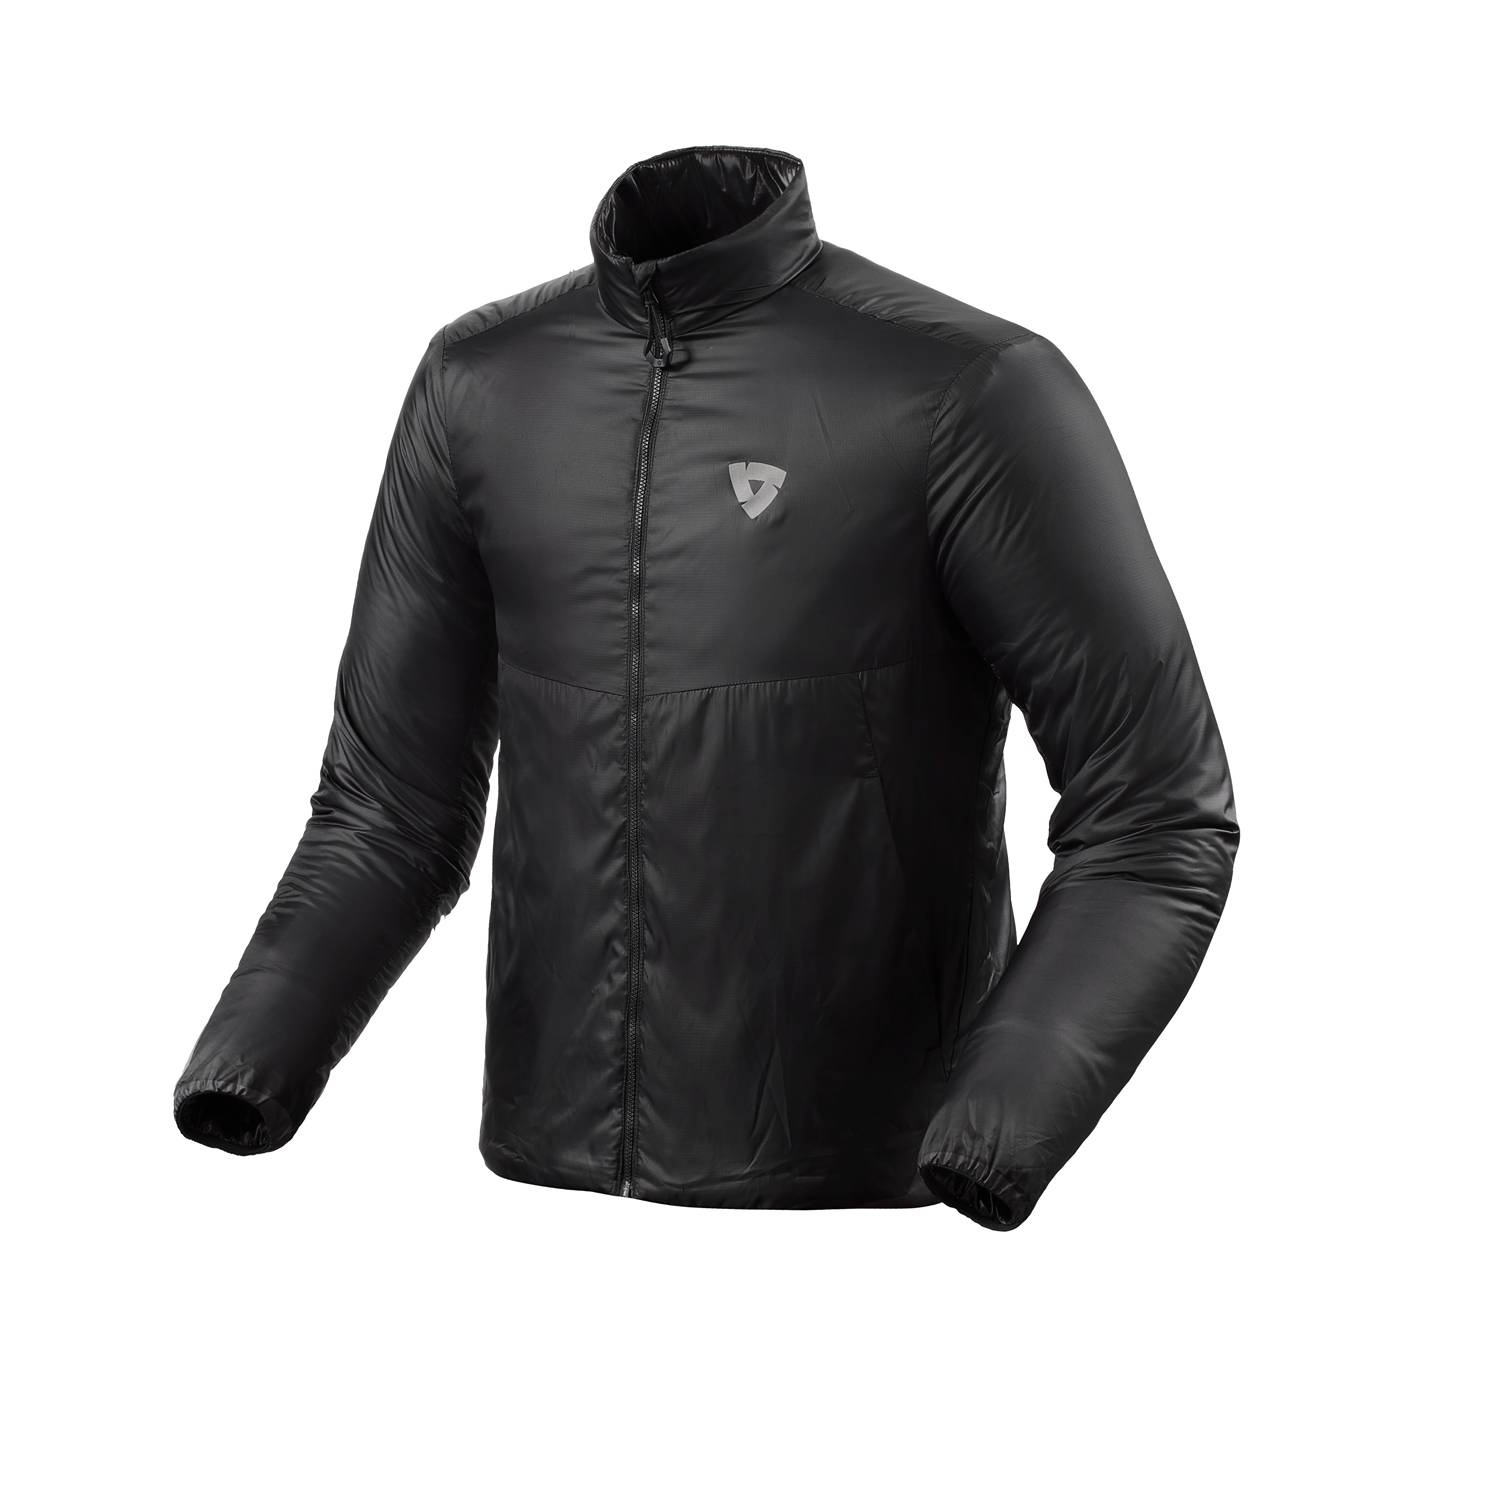 Image of REV'IT! Core 2 Mid Layer Jacket Black Größe M